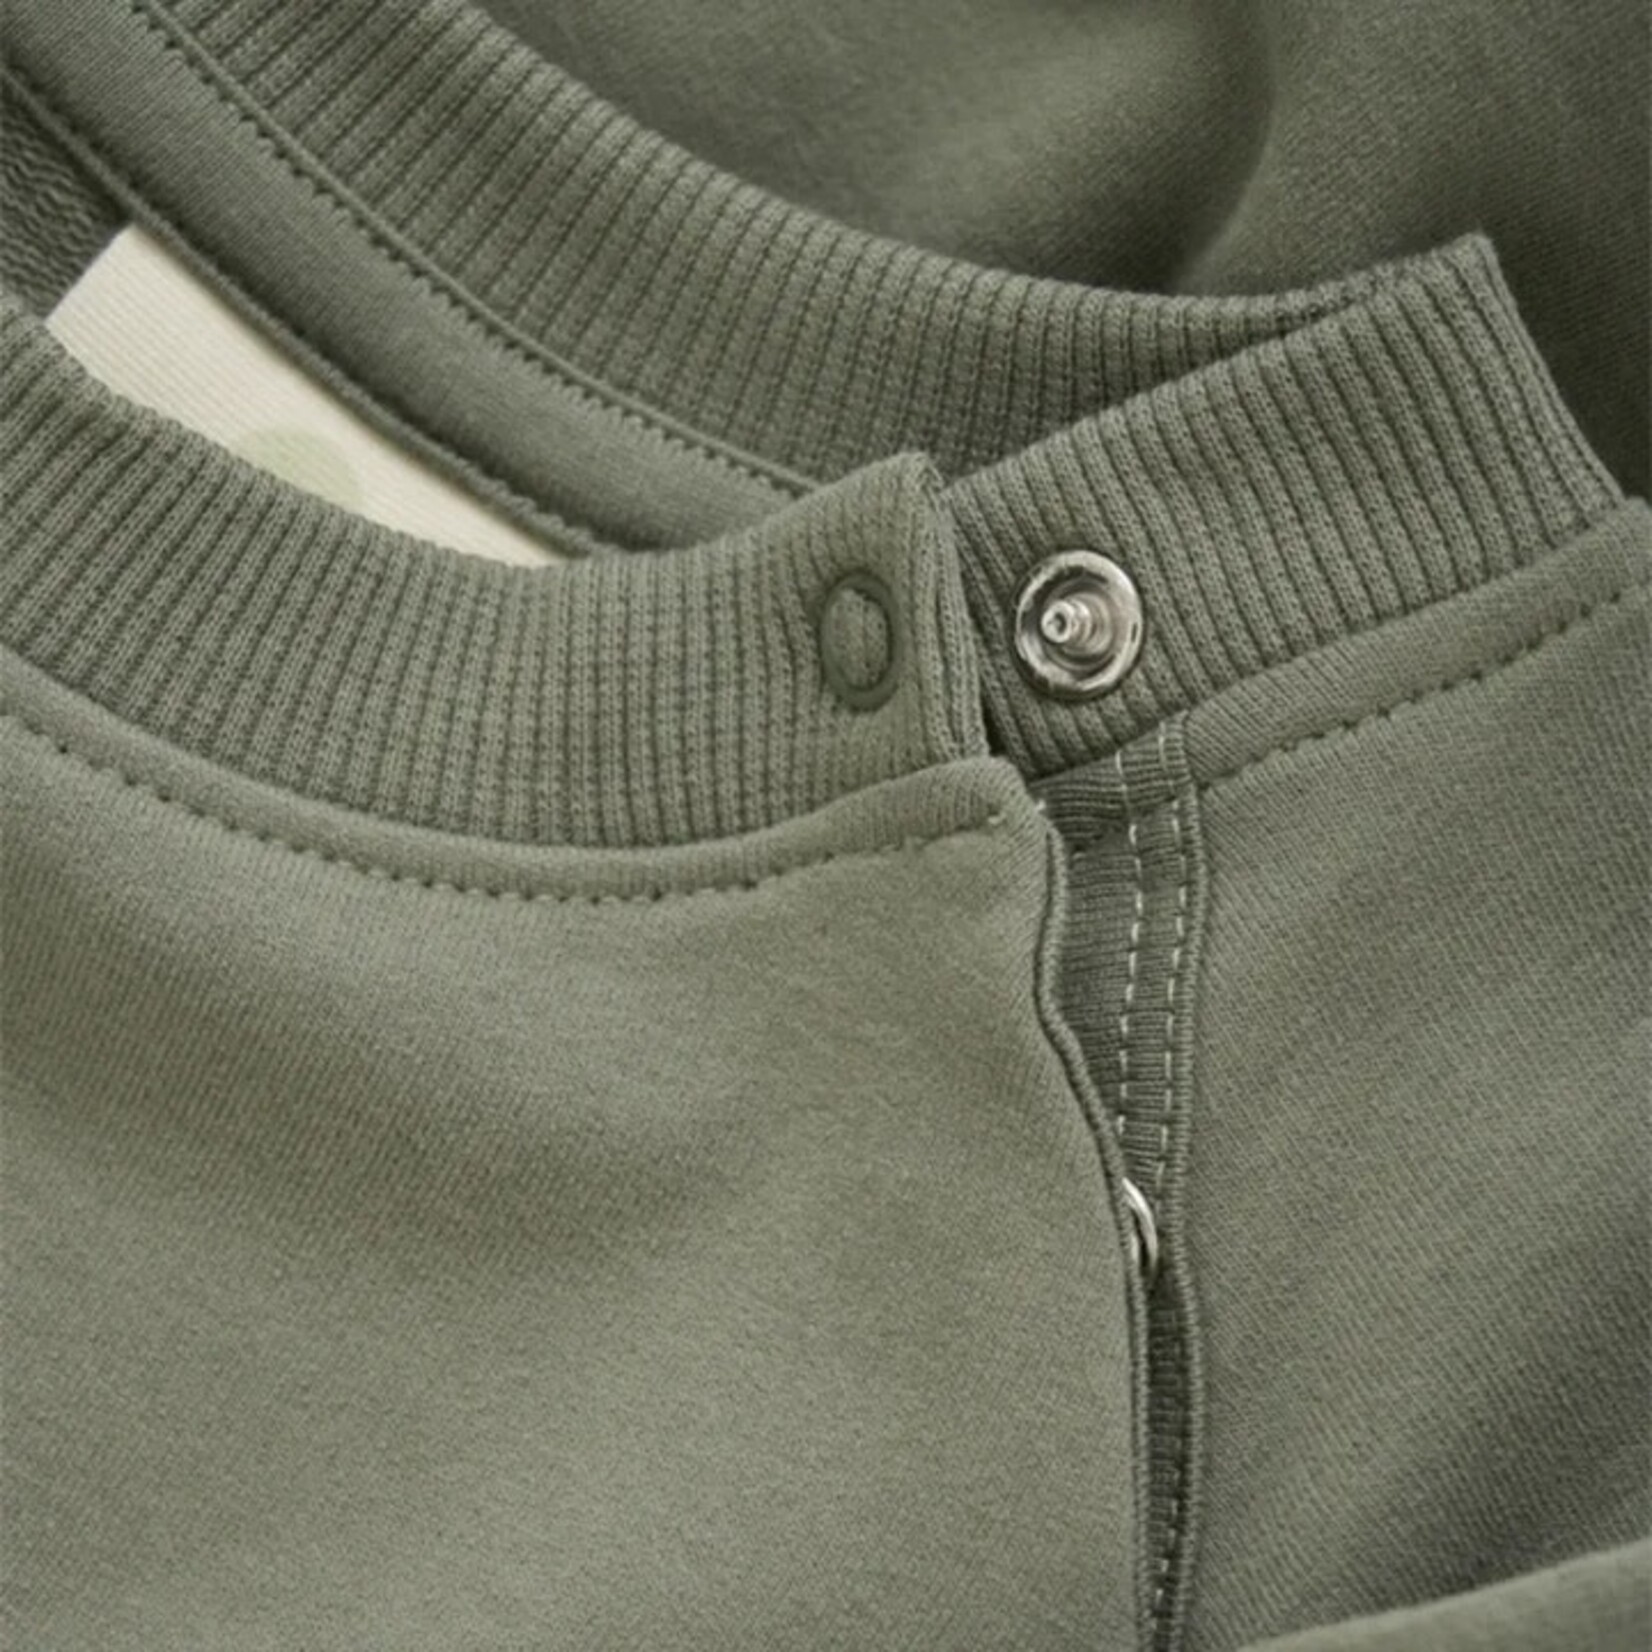 Enfant ENFANT - Light verdigris hooded cotton sweater with turtle print